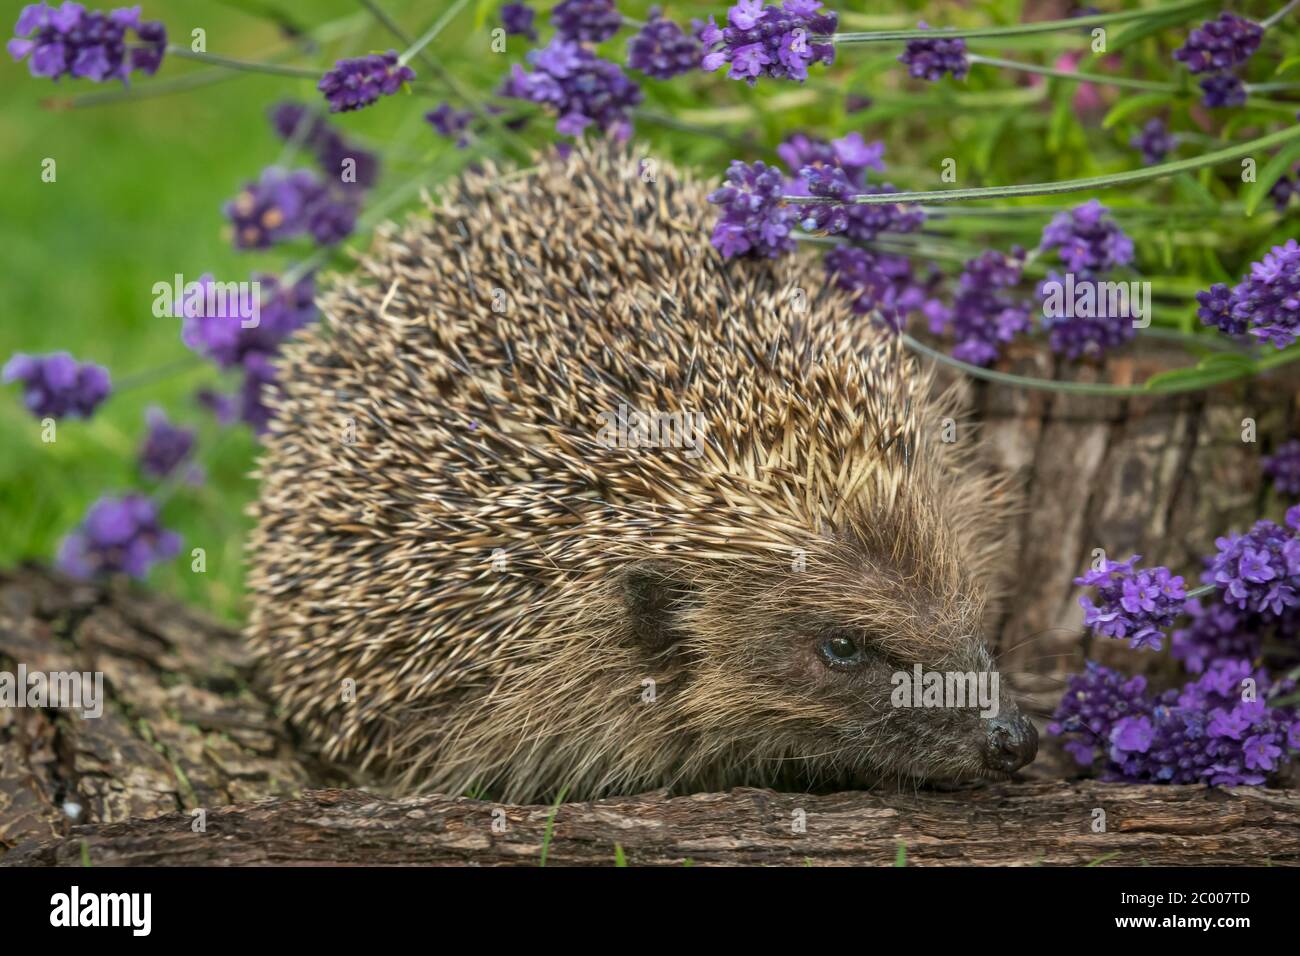 Hedgehog, (Scientific name: Erinaceus Europaeus) Wild, native, European hedgehog in natural garden habitat with colourful purple lavender plants. Stock Photo